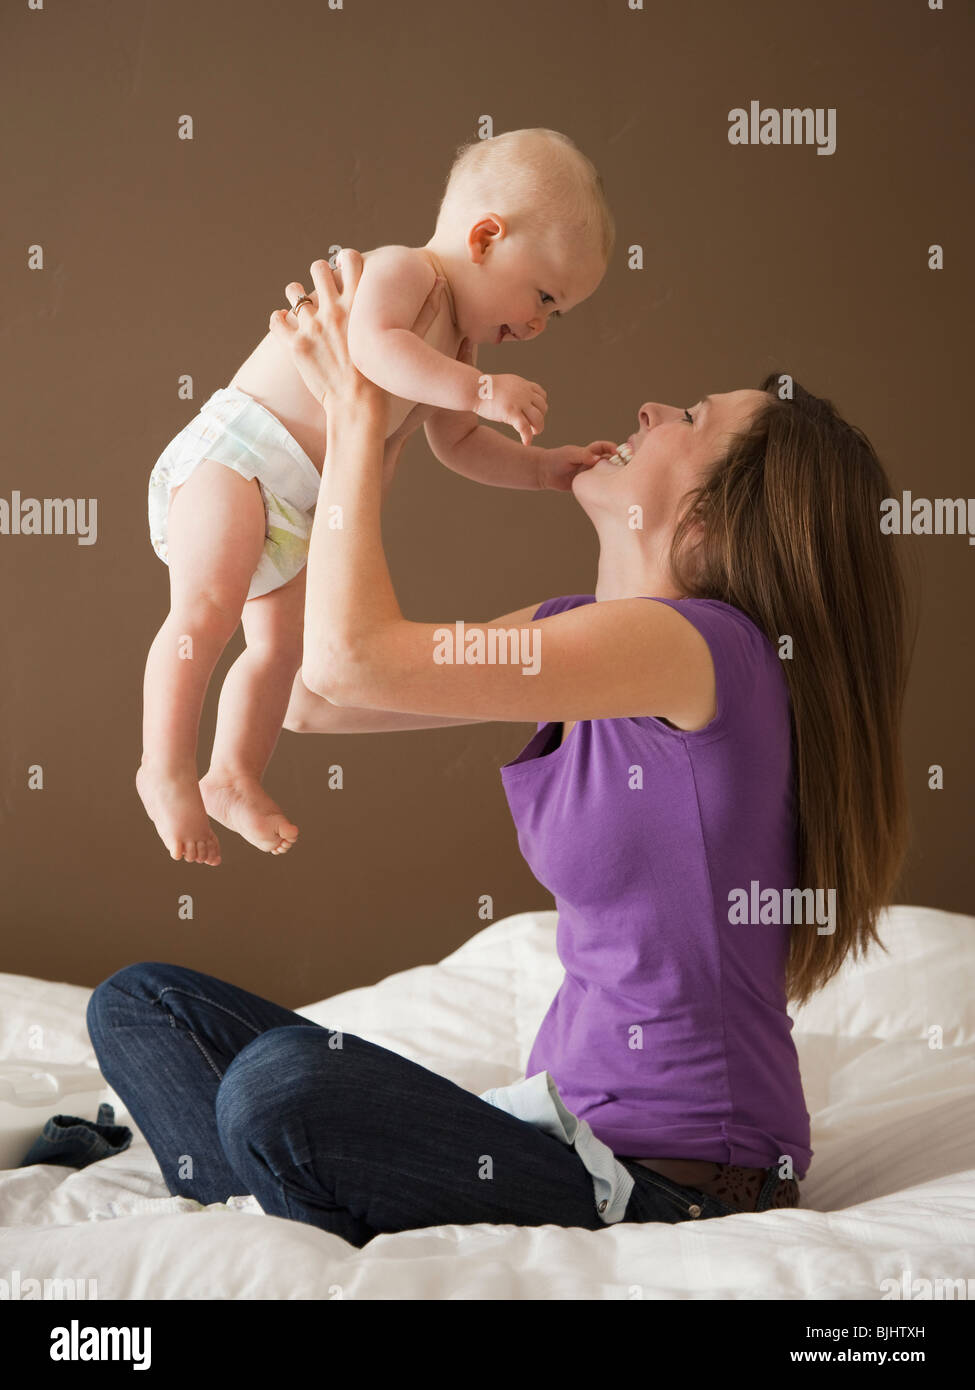 Woman holding baby Stock Photo - Alamy